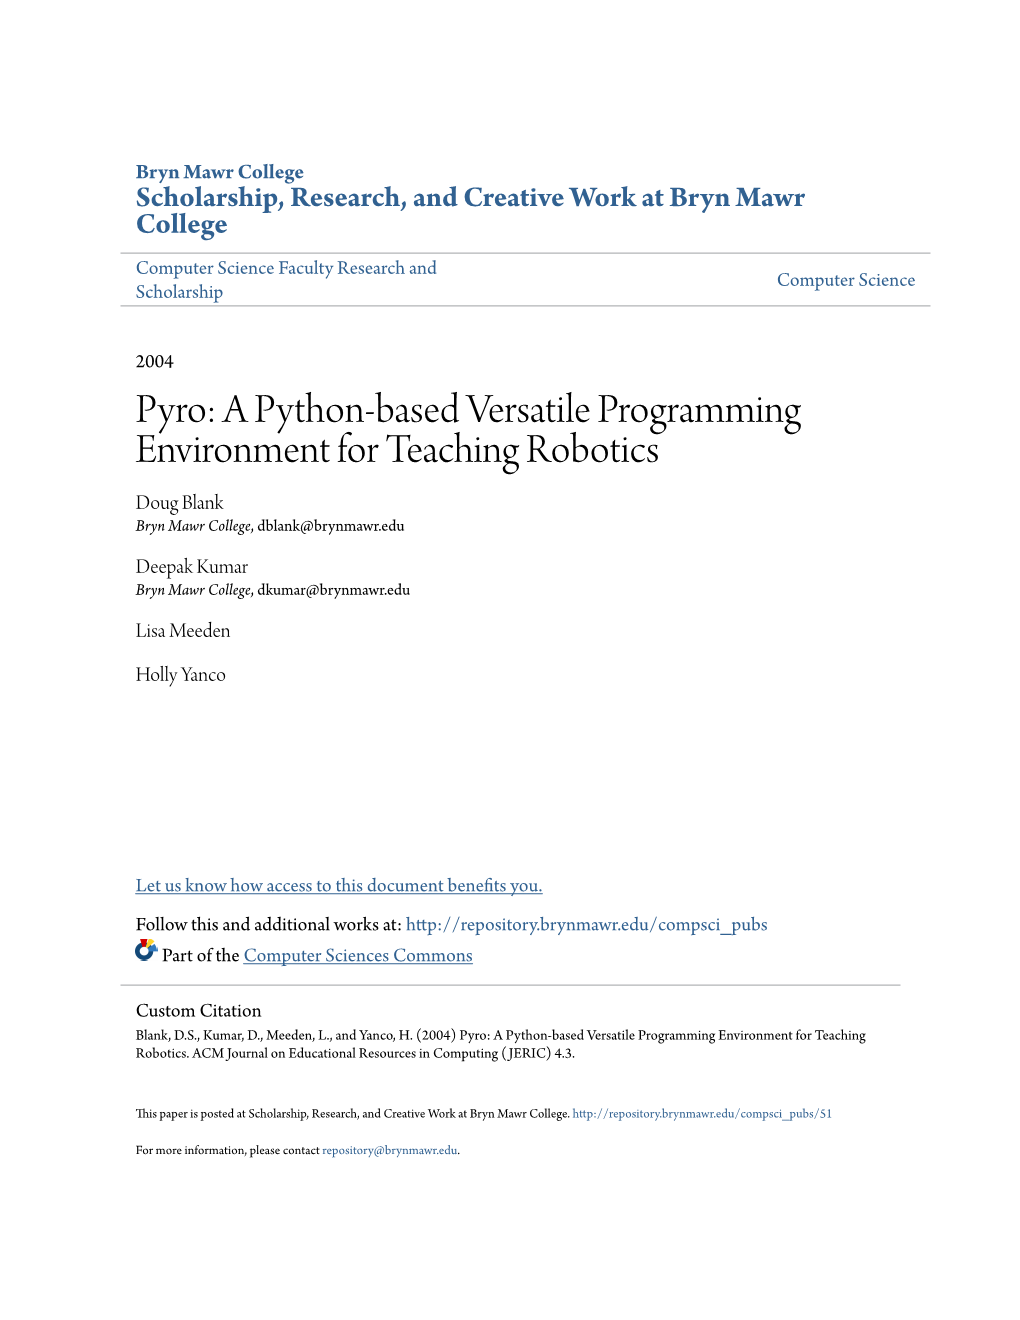 Pyro: a Python-Based Versatile Programming Environment for Teaching Robotics Doug Blank Bryn Mawr College, Dblank@Brynmawr.Edu